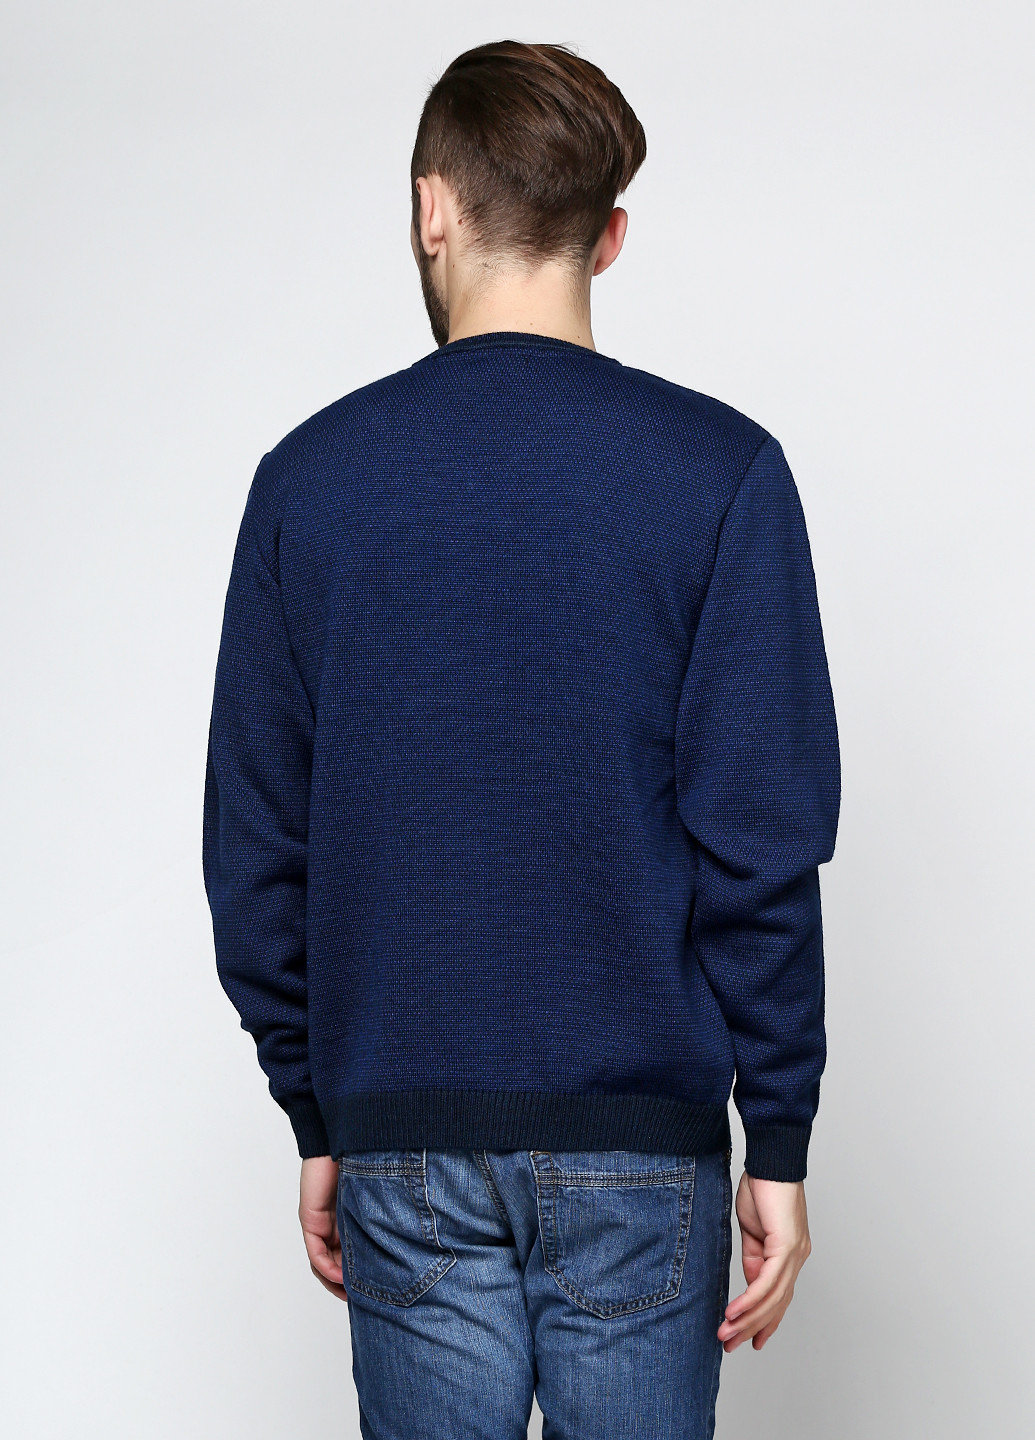 Темно-синий демисезонный пуловер пуловер Belika